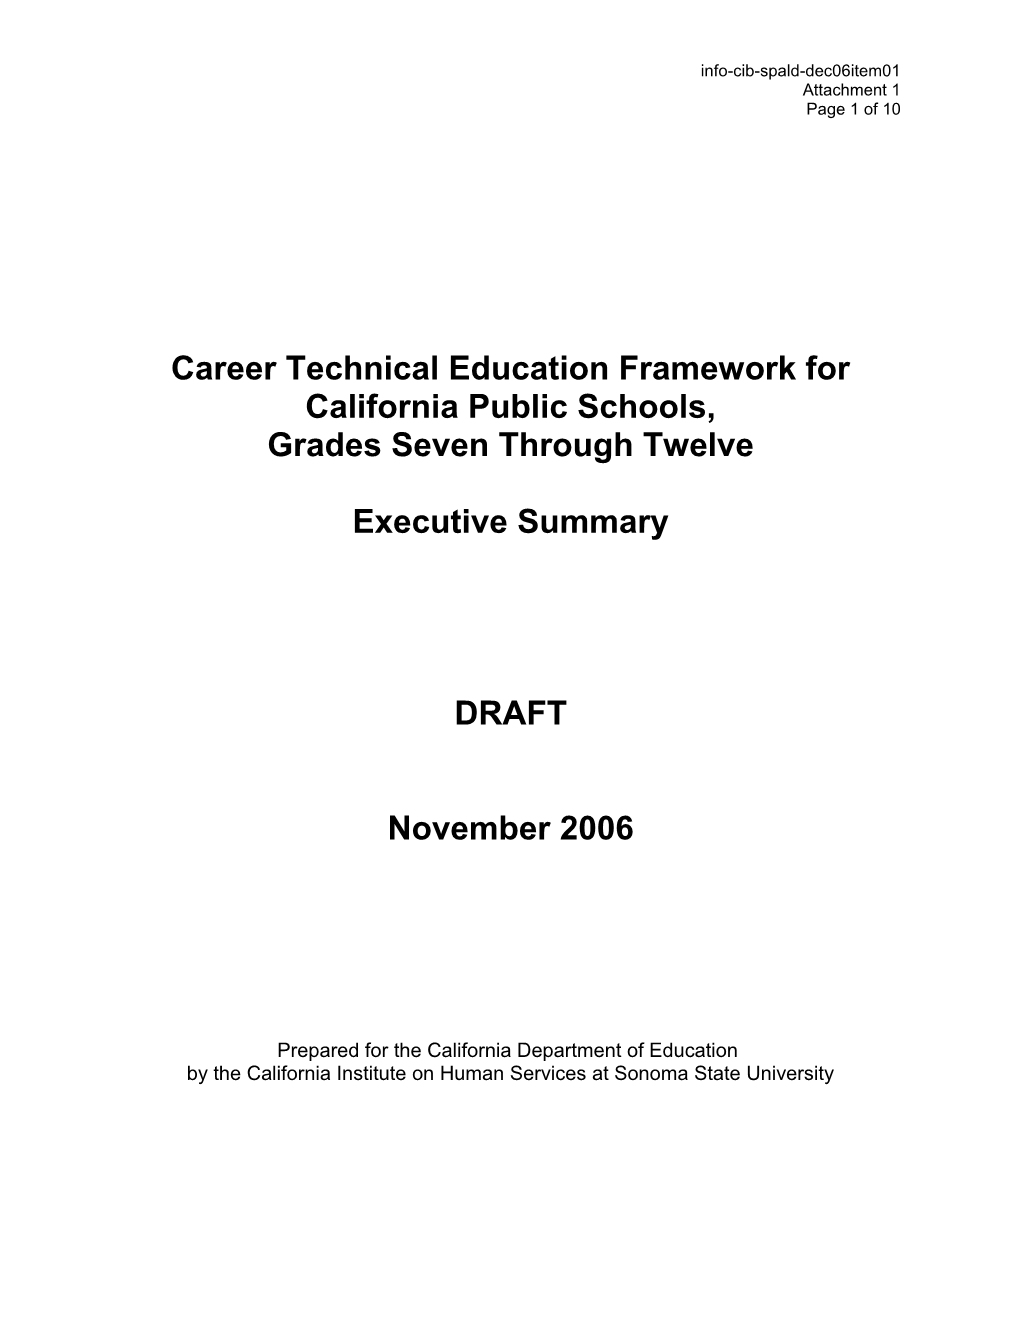 December 2006 SPALD Item 1 Attachment 1 - Information Memorandum (CA State Board of Education)